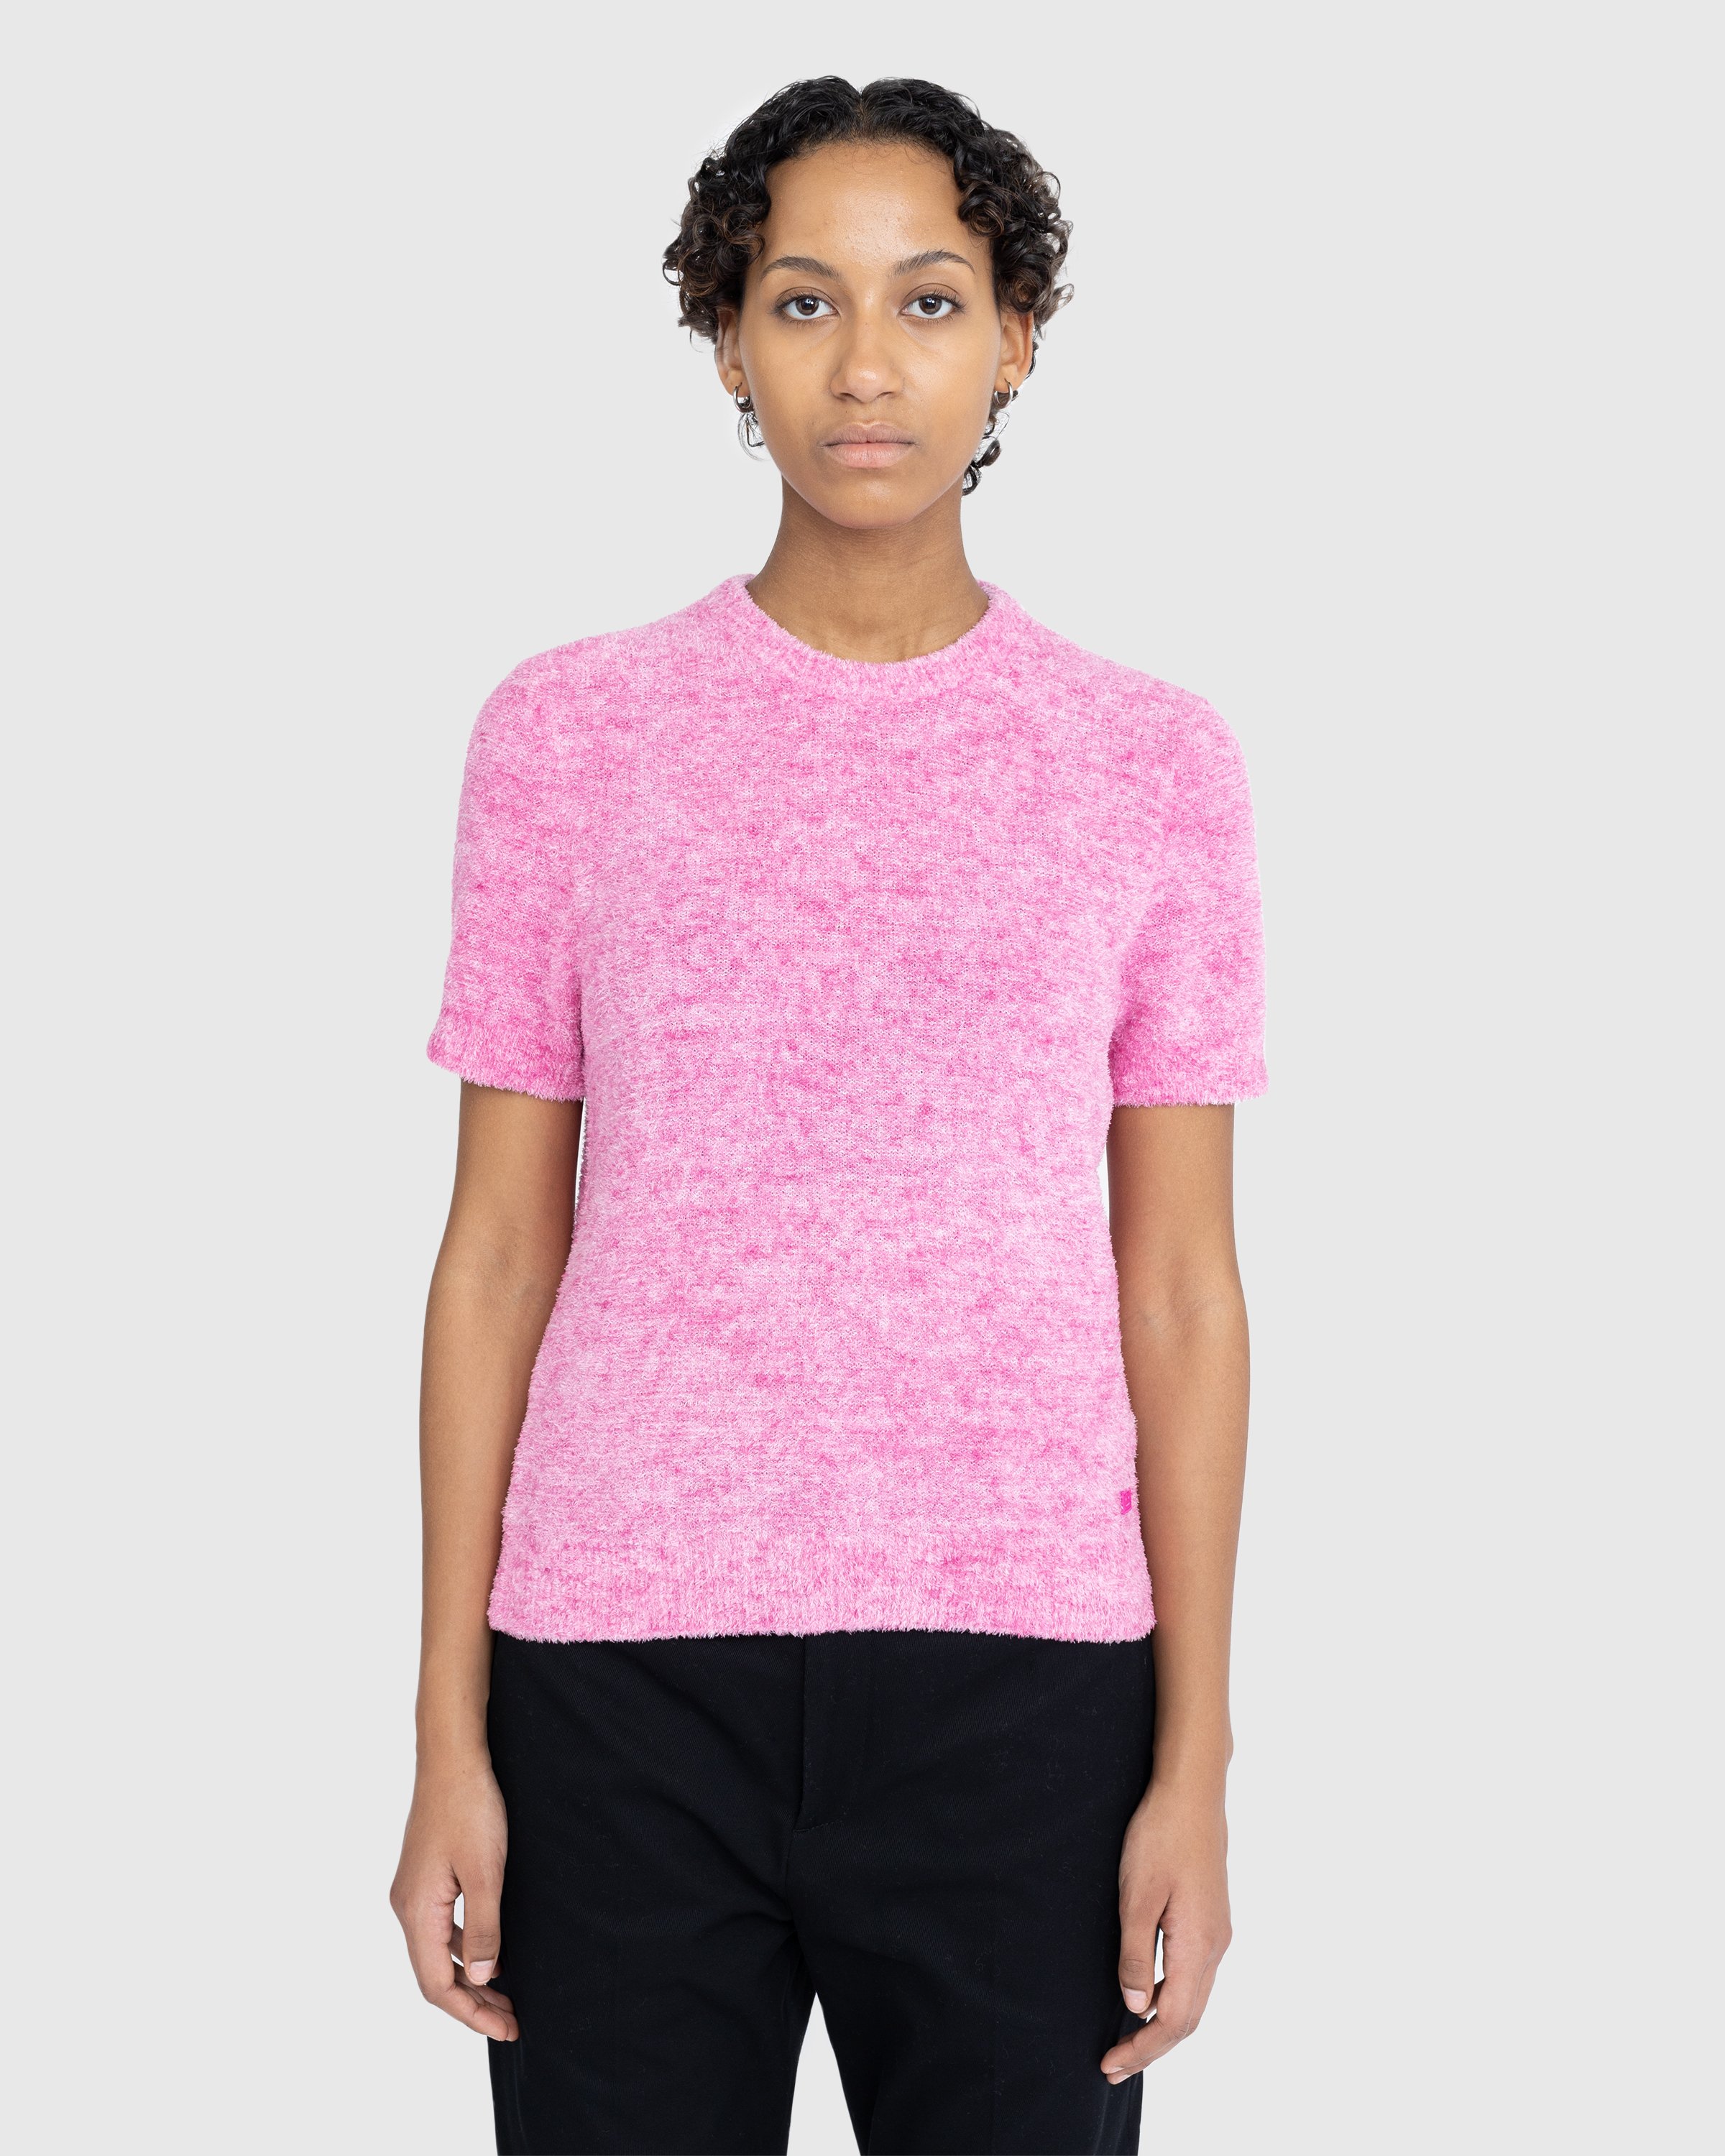 Acne Studios - Short-Sleeve Crewneck Sweater Pink - Clothing - Pink - Image 2